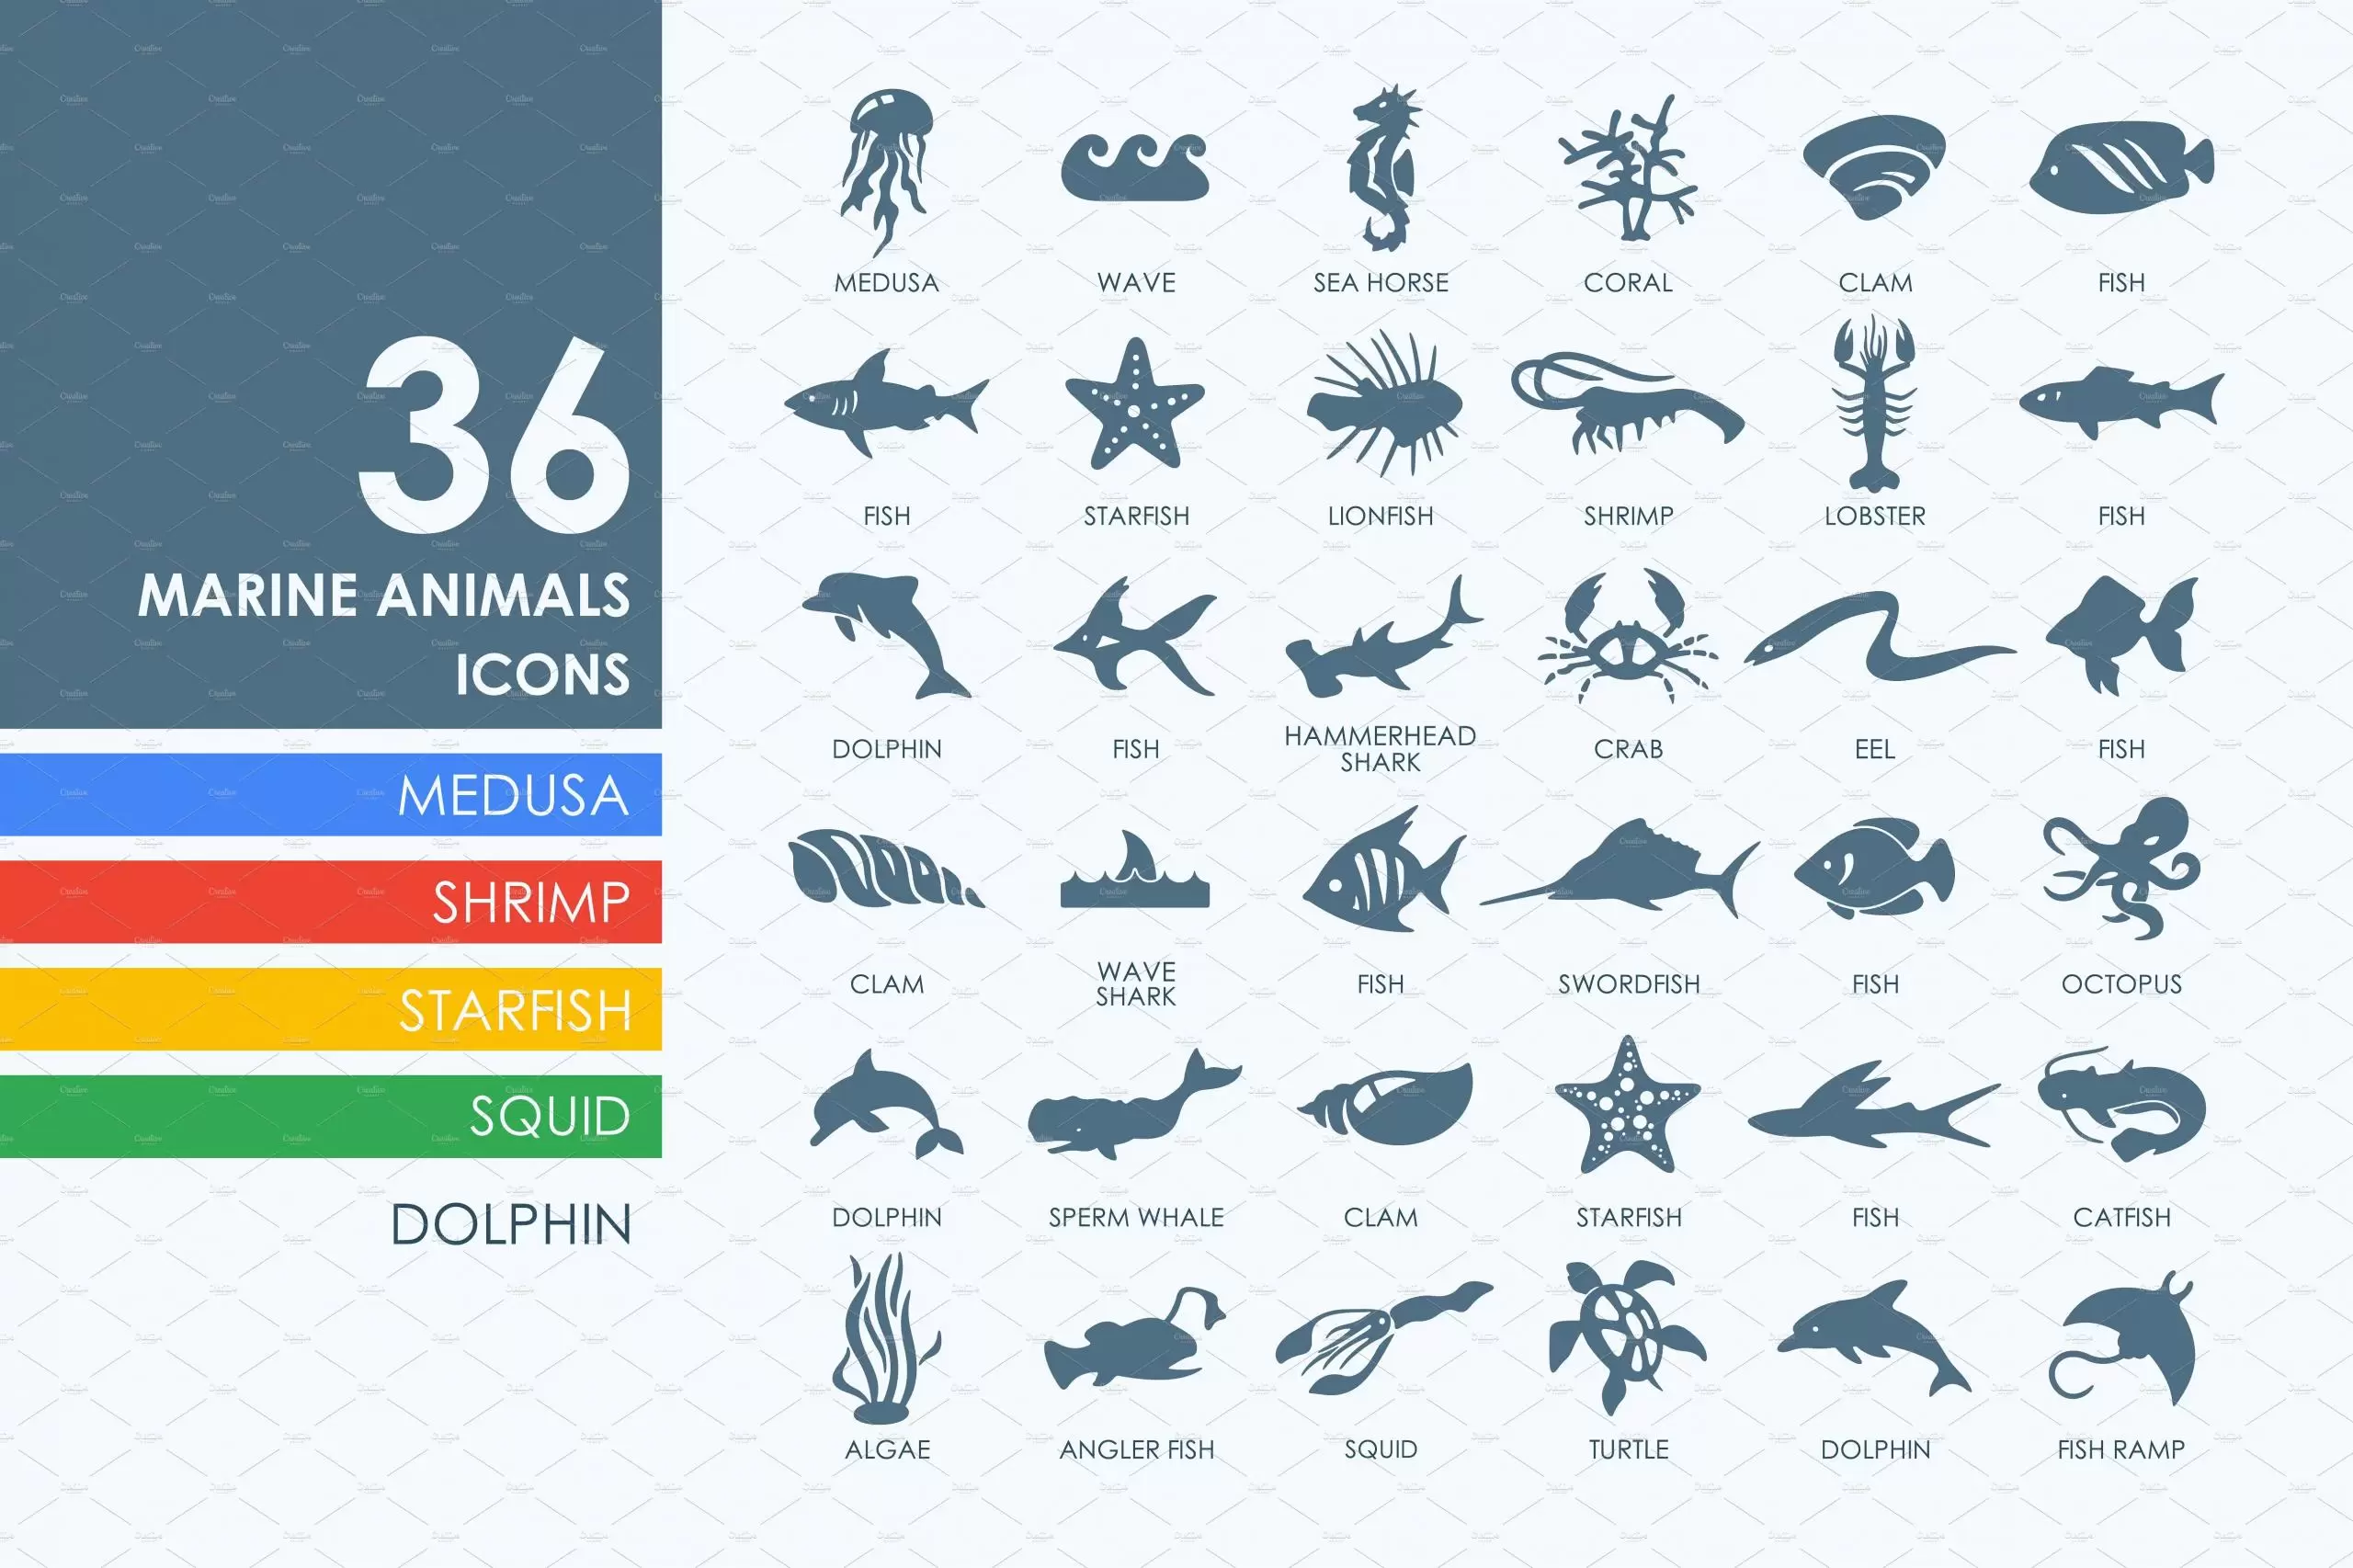 海洋动物图标素材 36 Marine Animals icons插图